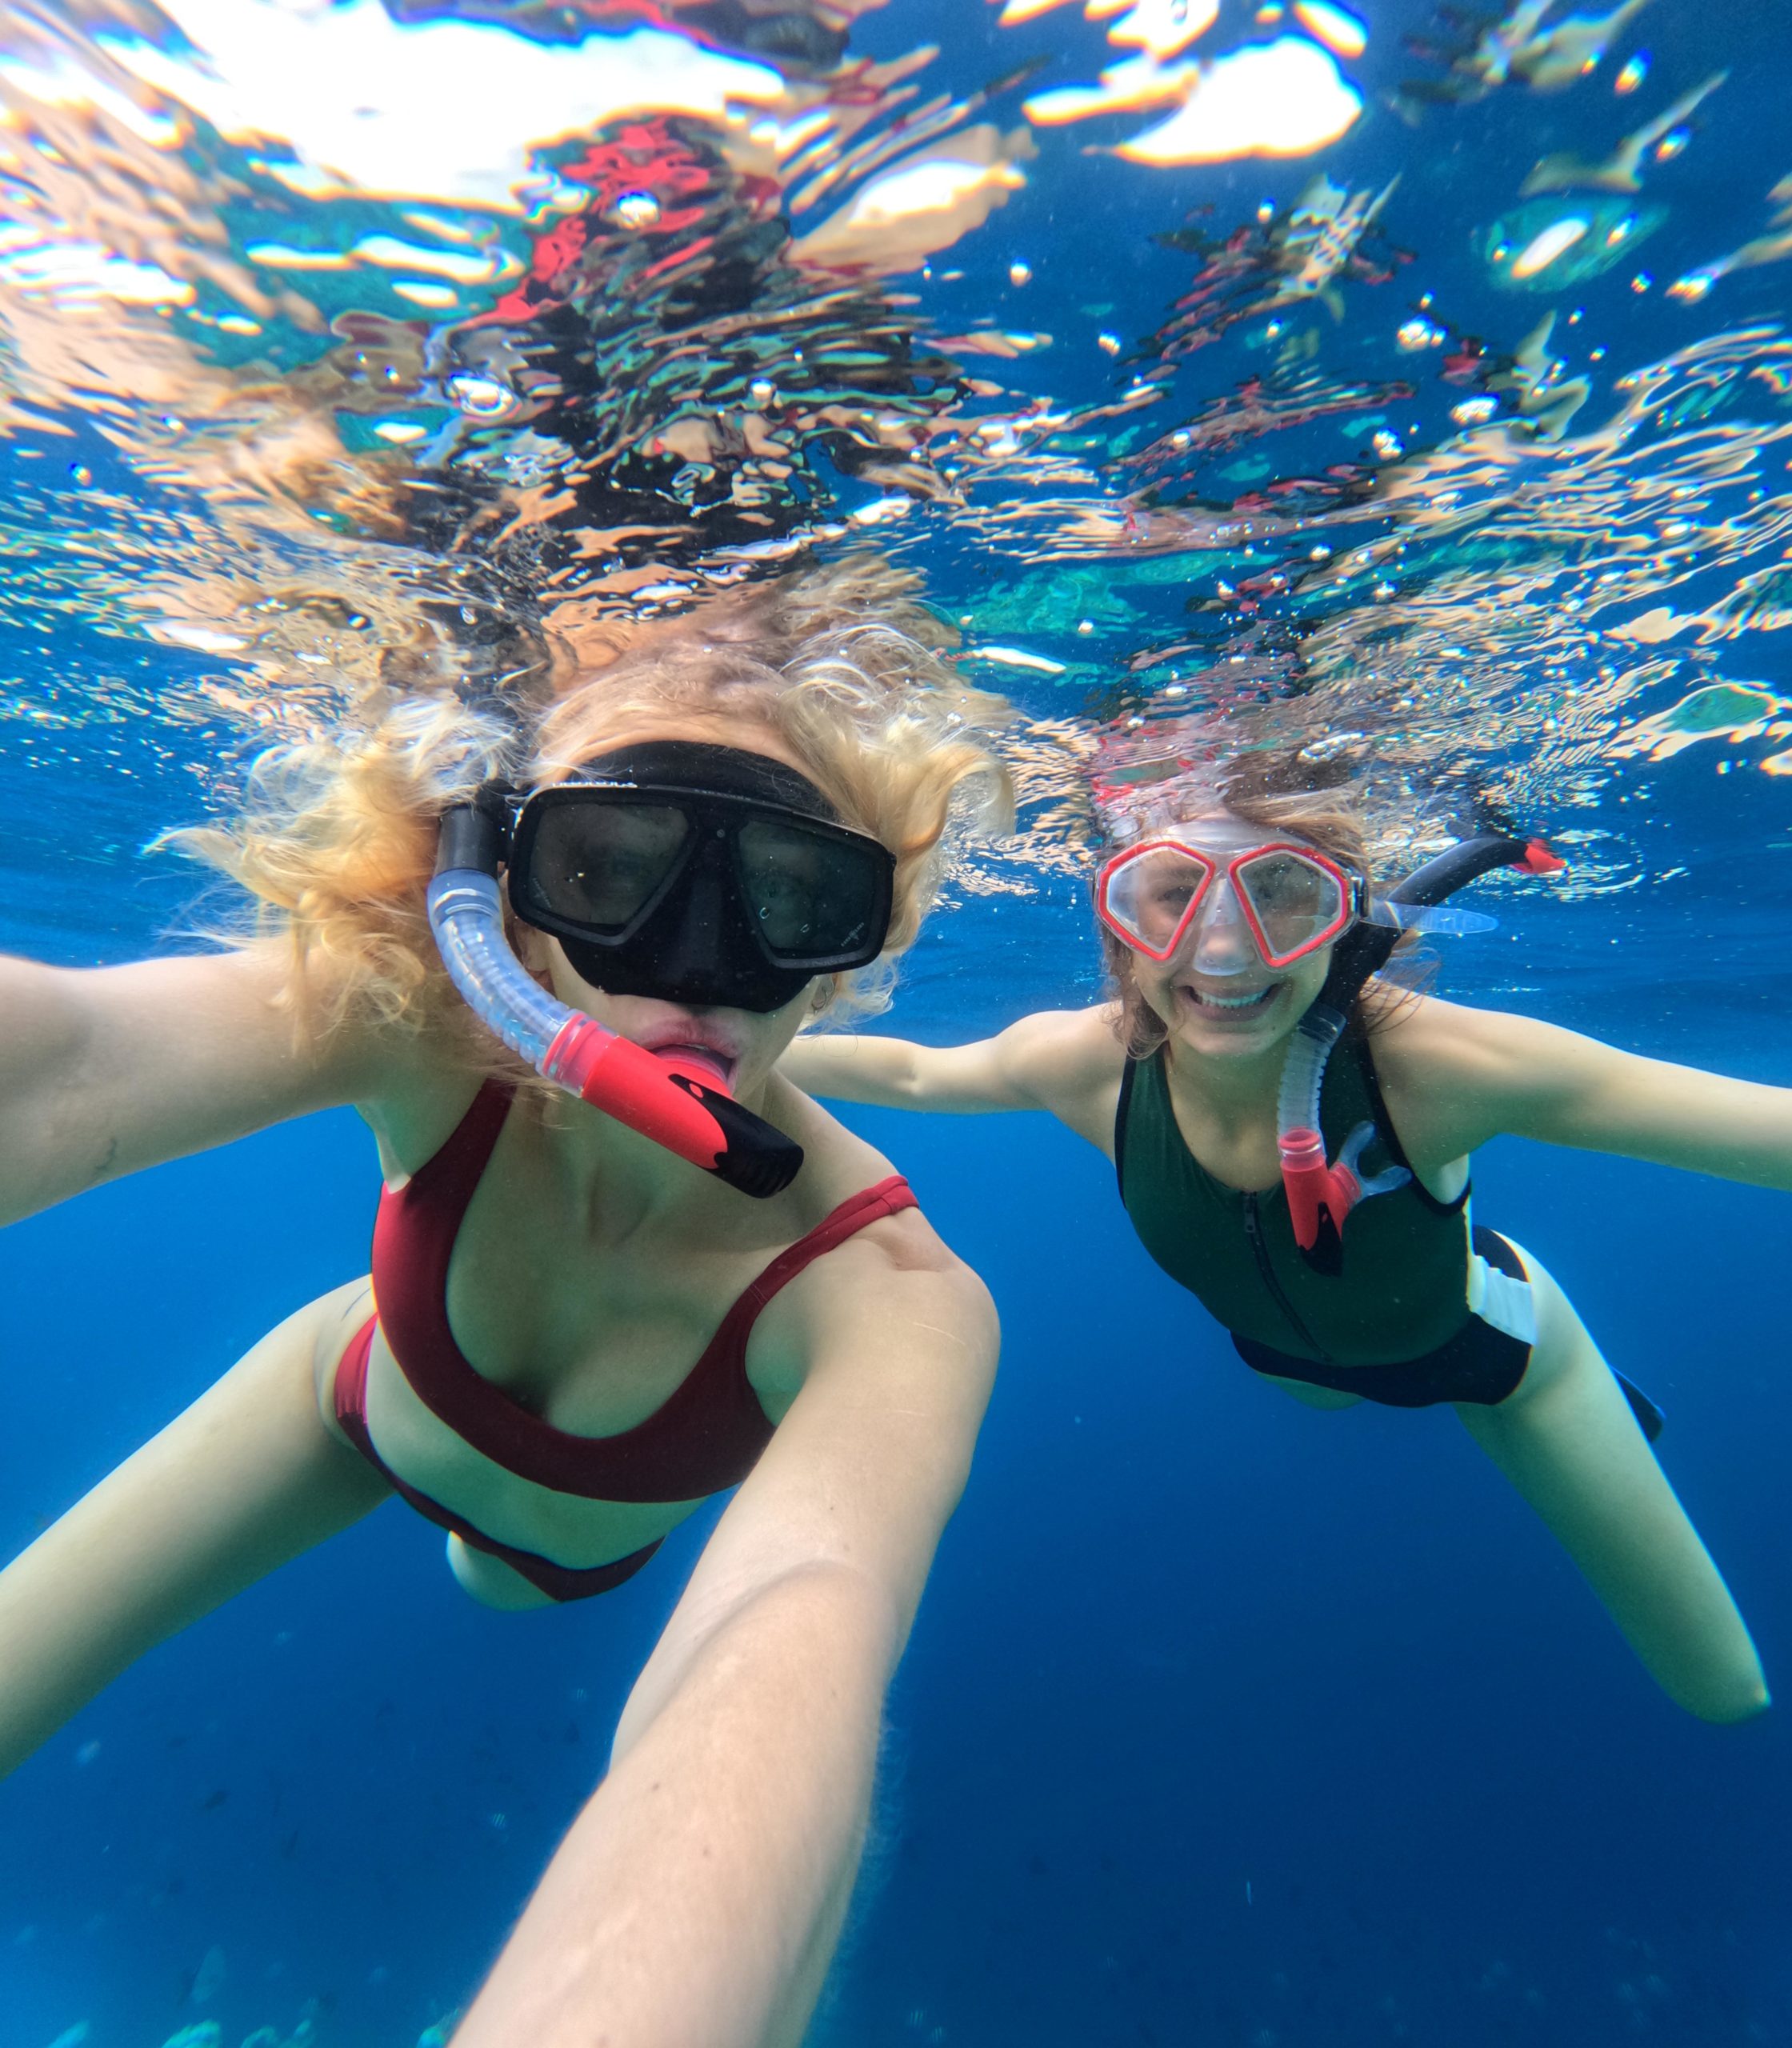 Zanna van Dijk and a friend snorkelling in the Maldives